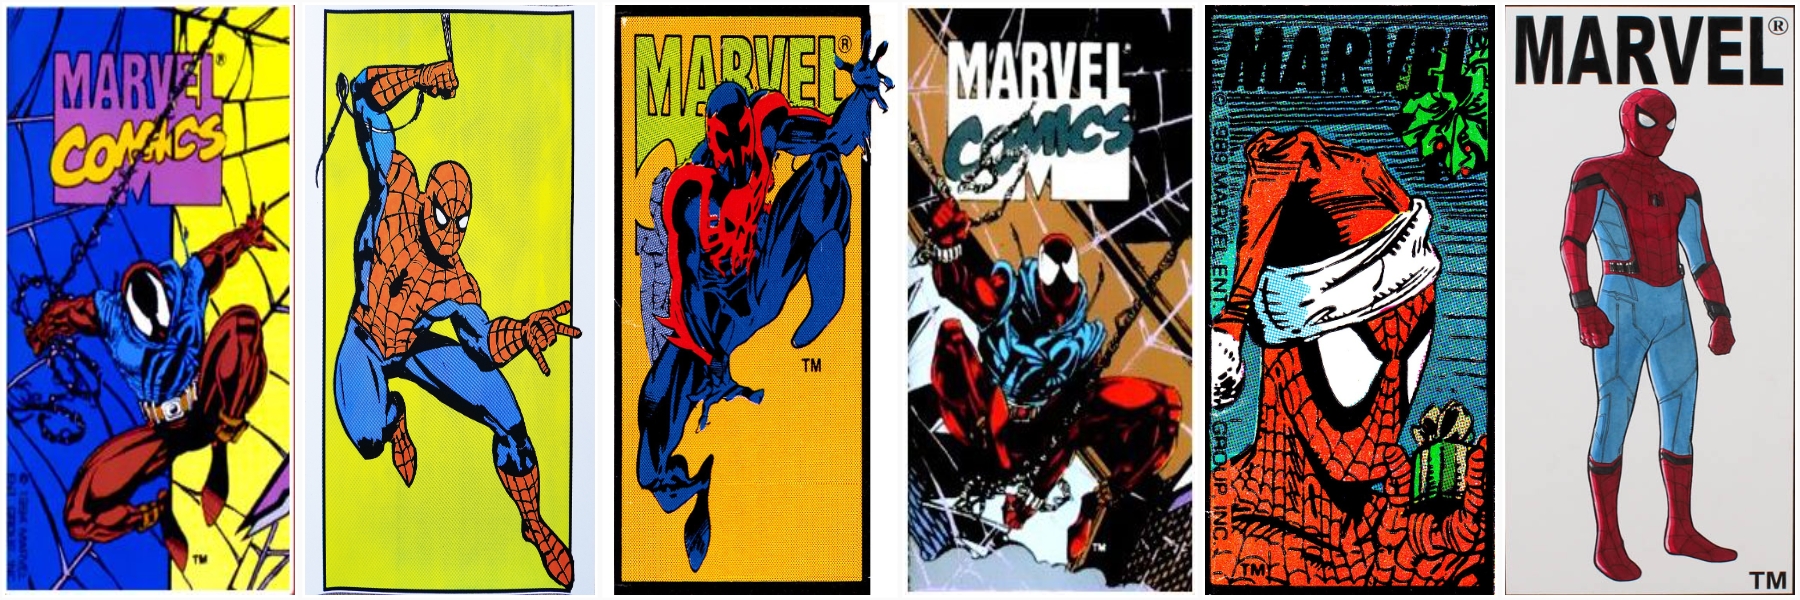 Amazing Spider-Man #440-441, Spider-Man #96-98, Spectacular Spider-Man #262-263, Sensational Spider-Man #32-33 (1998): Gathering of Five/The Final Chapter